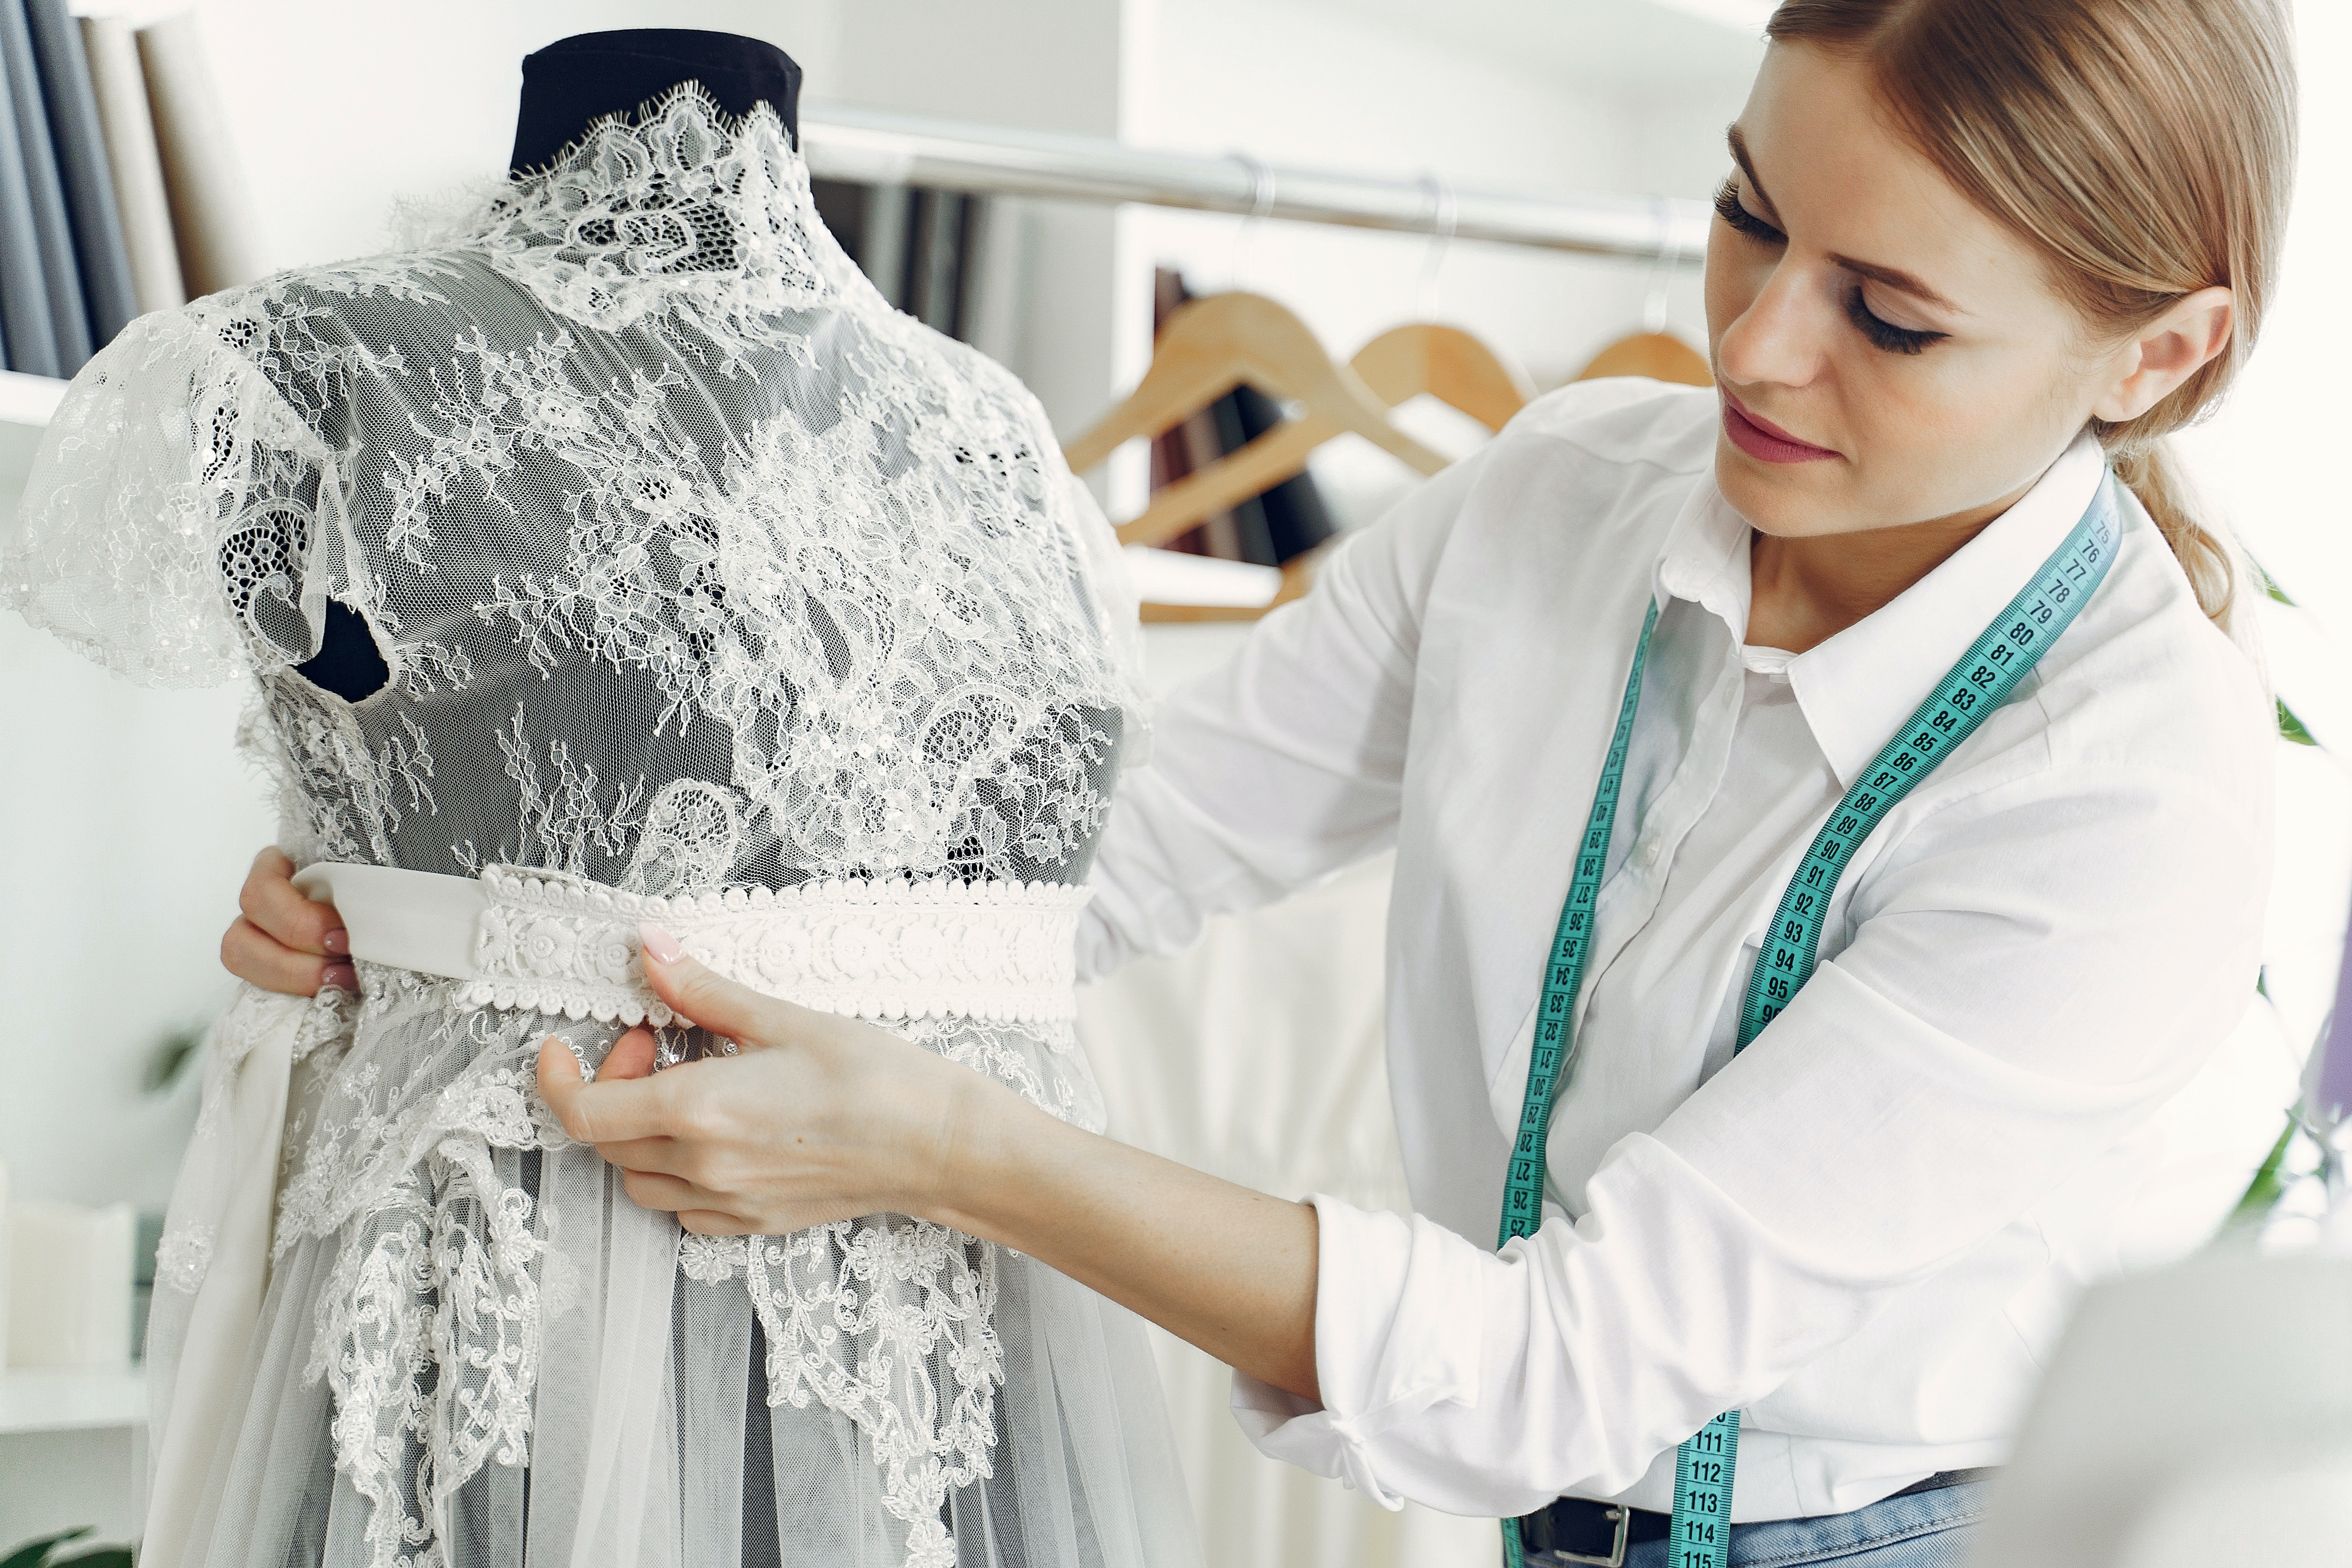 A wedding dress designer working on a dress | Source: Pexels